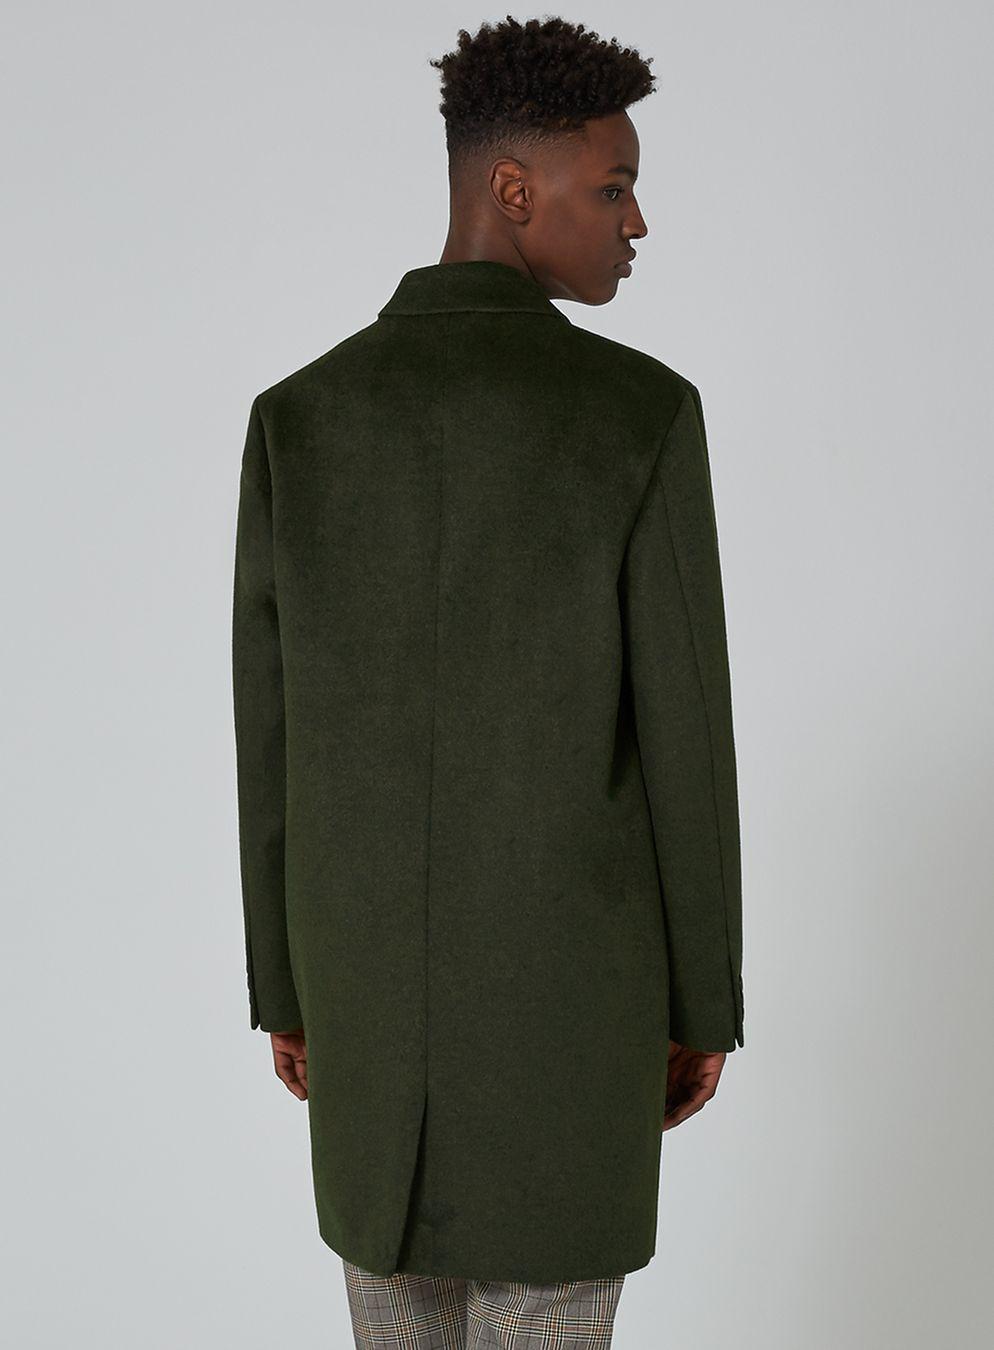 Lyst - Topman Khaki Overcoat Containing Wool in Green for Men